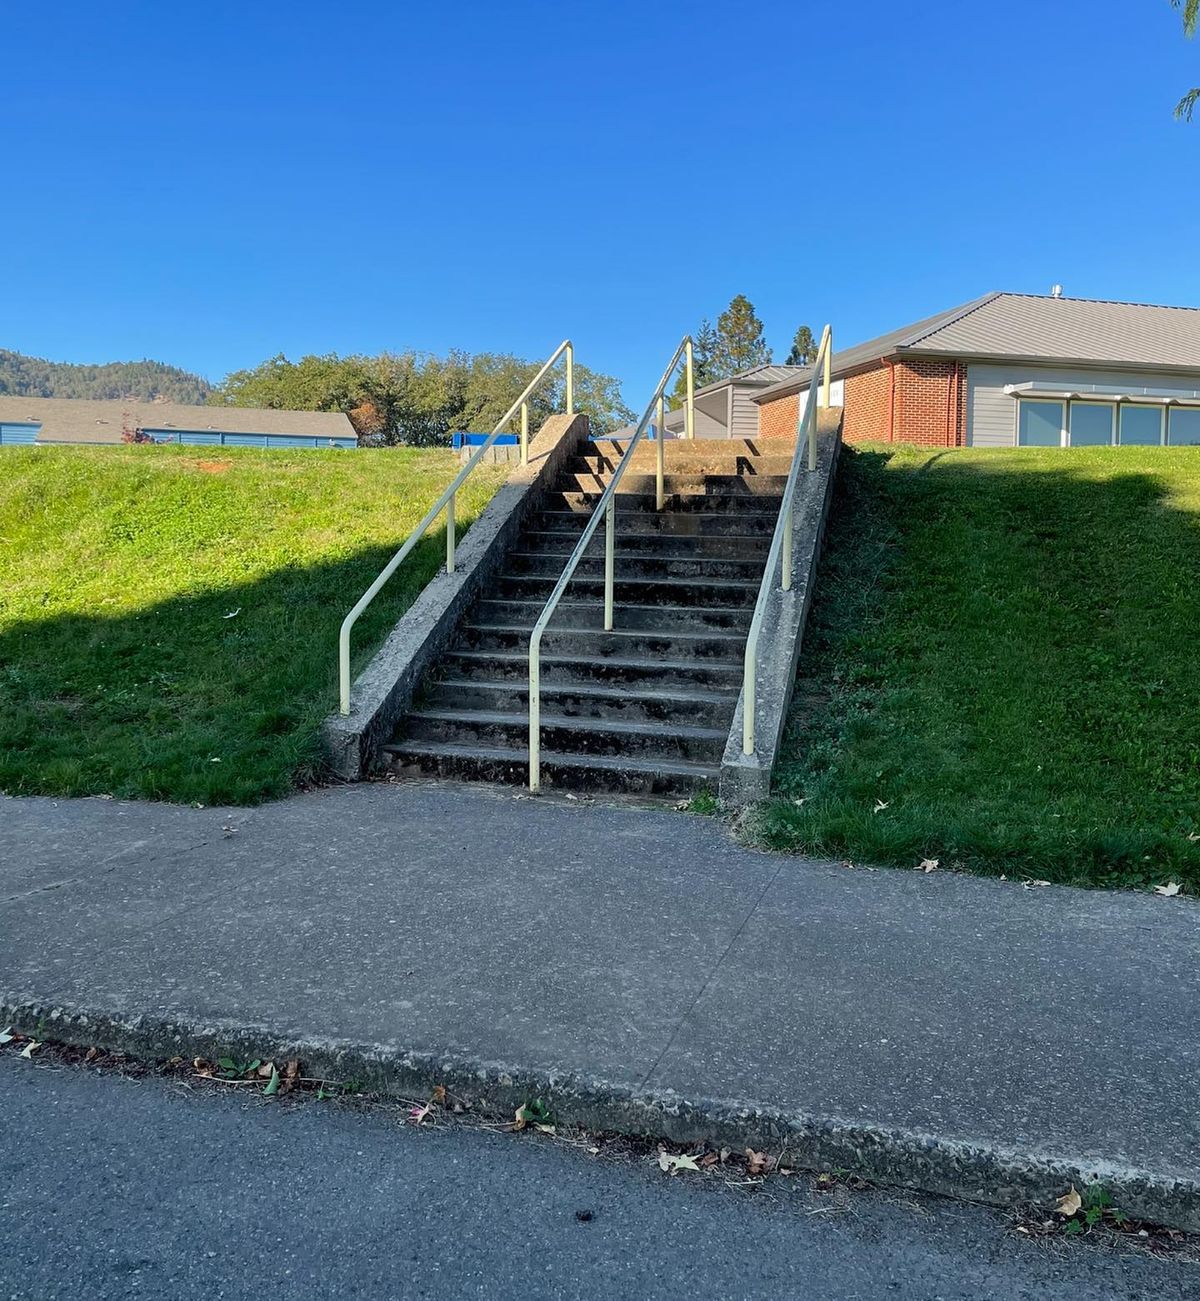 Image for skate spot Myrtle Creek Elementary School - 14 Stair Rail